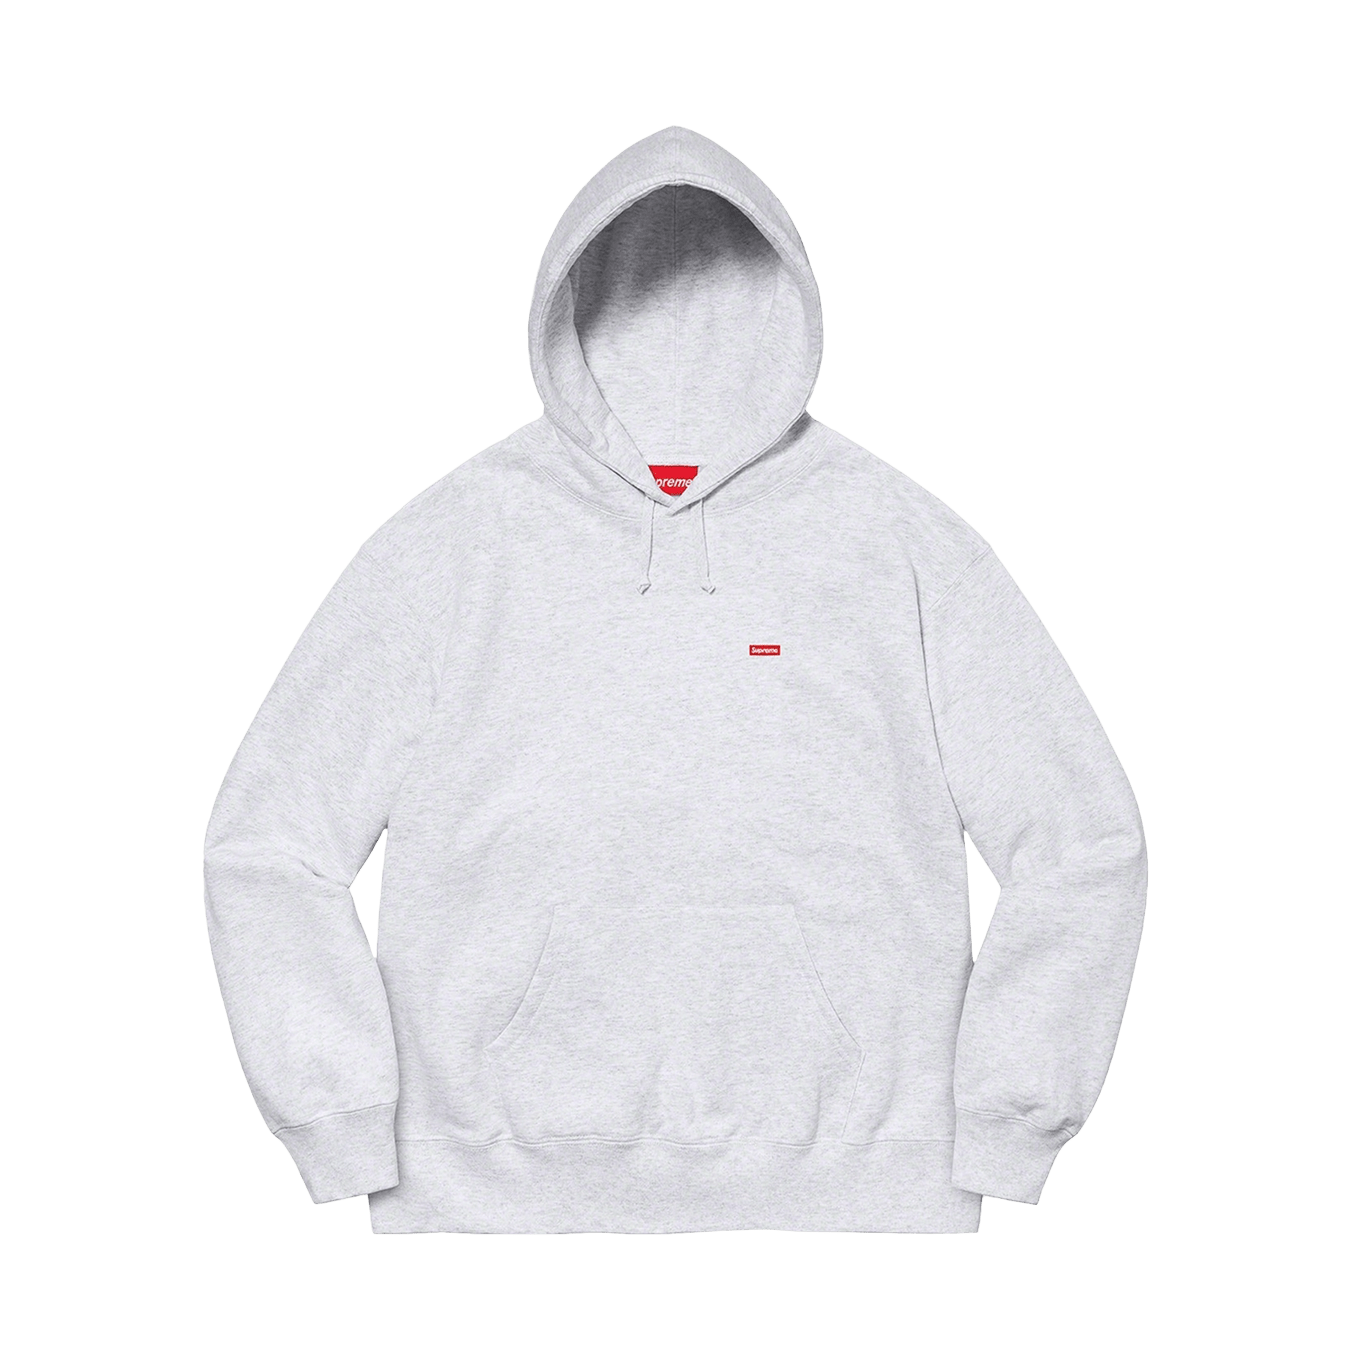 Supreme Small Box Logo Hooded Sweatshirt Ash Grey Size Small New